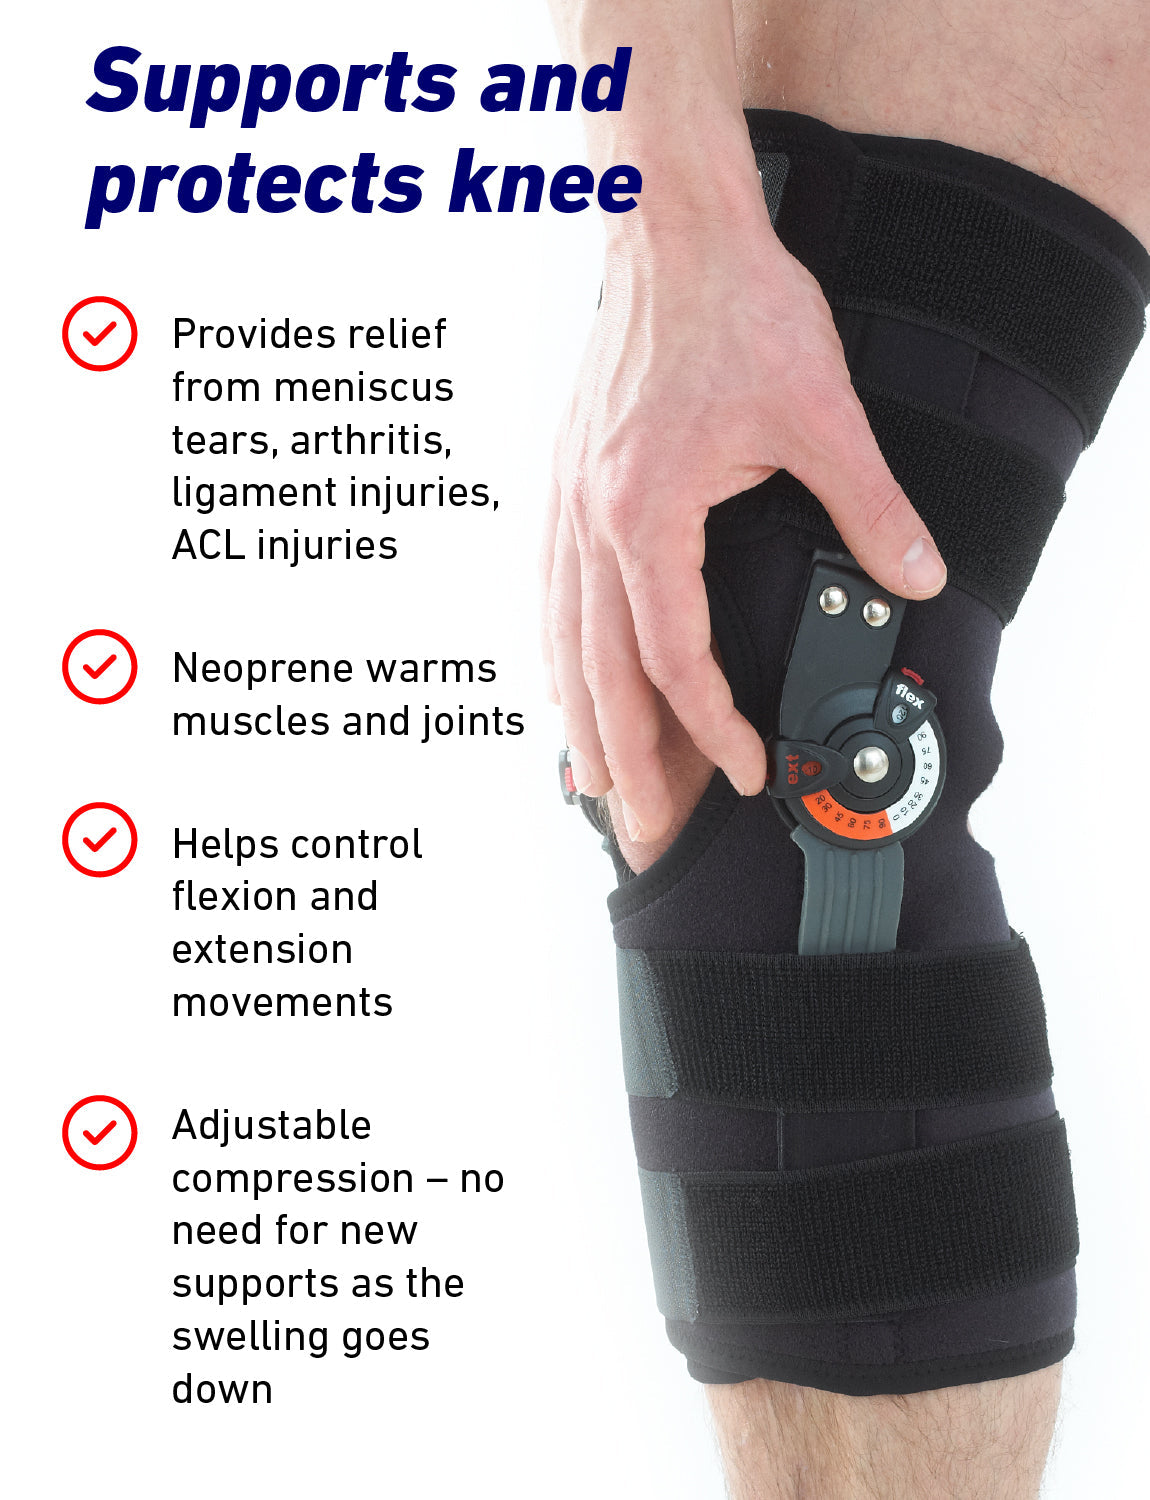 Adjusta-Fit Hinged Knee Brace – Neo G USA